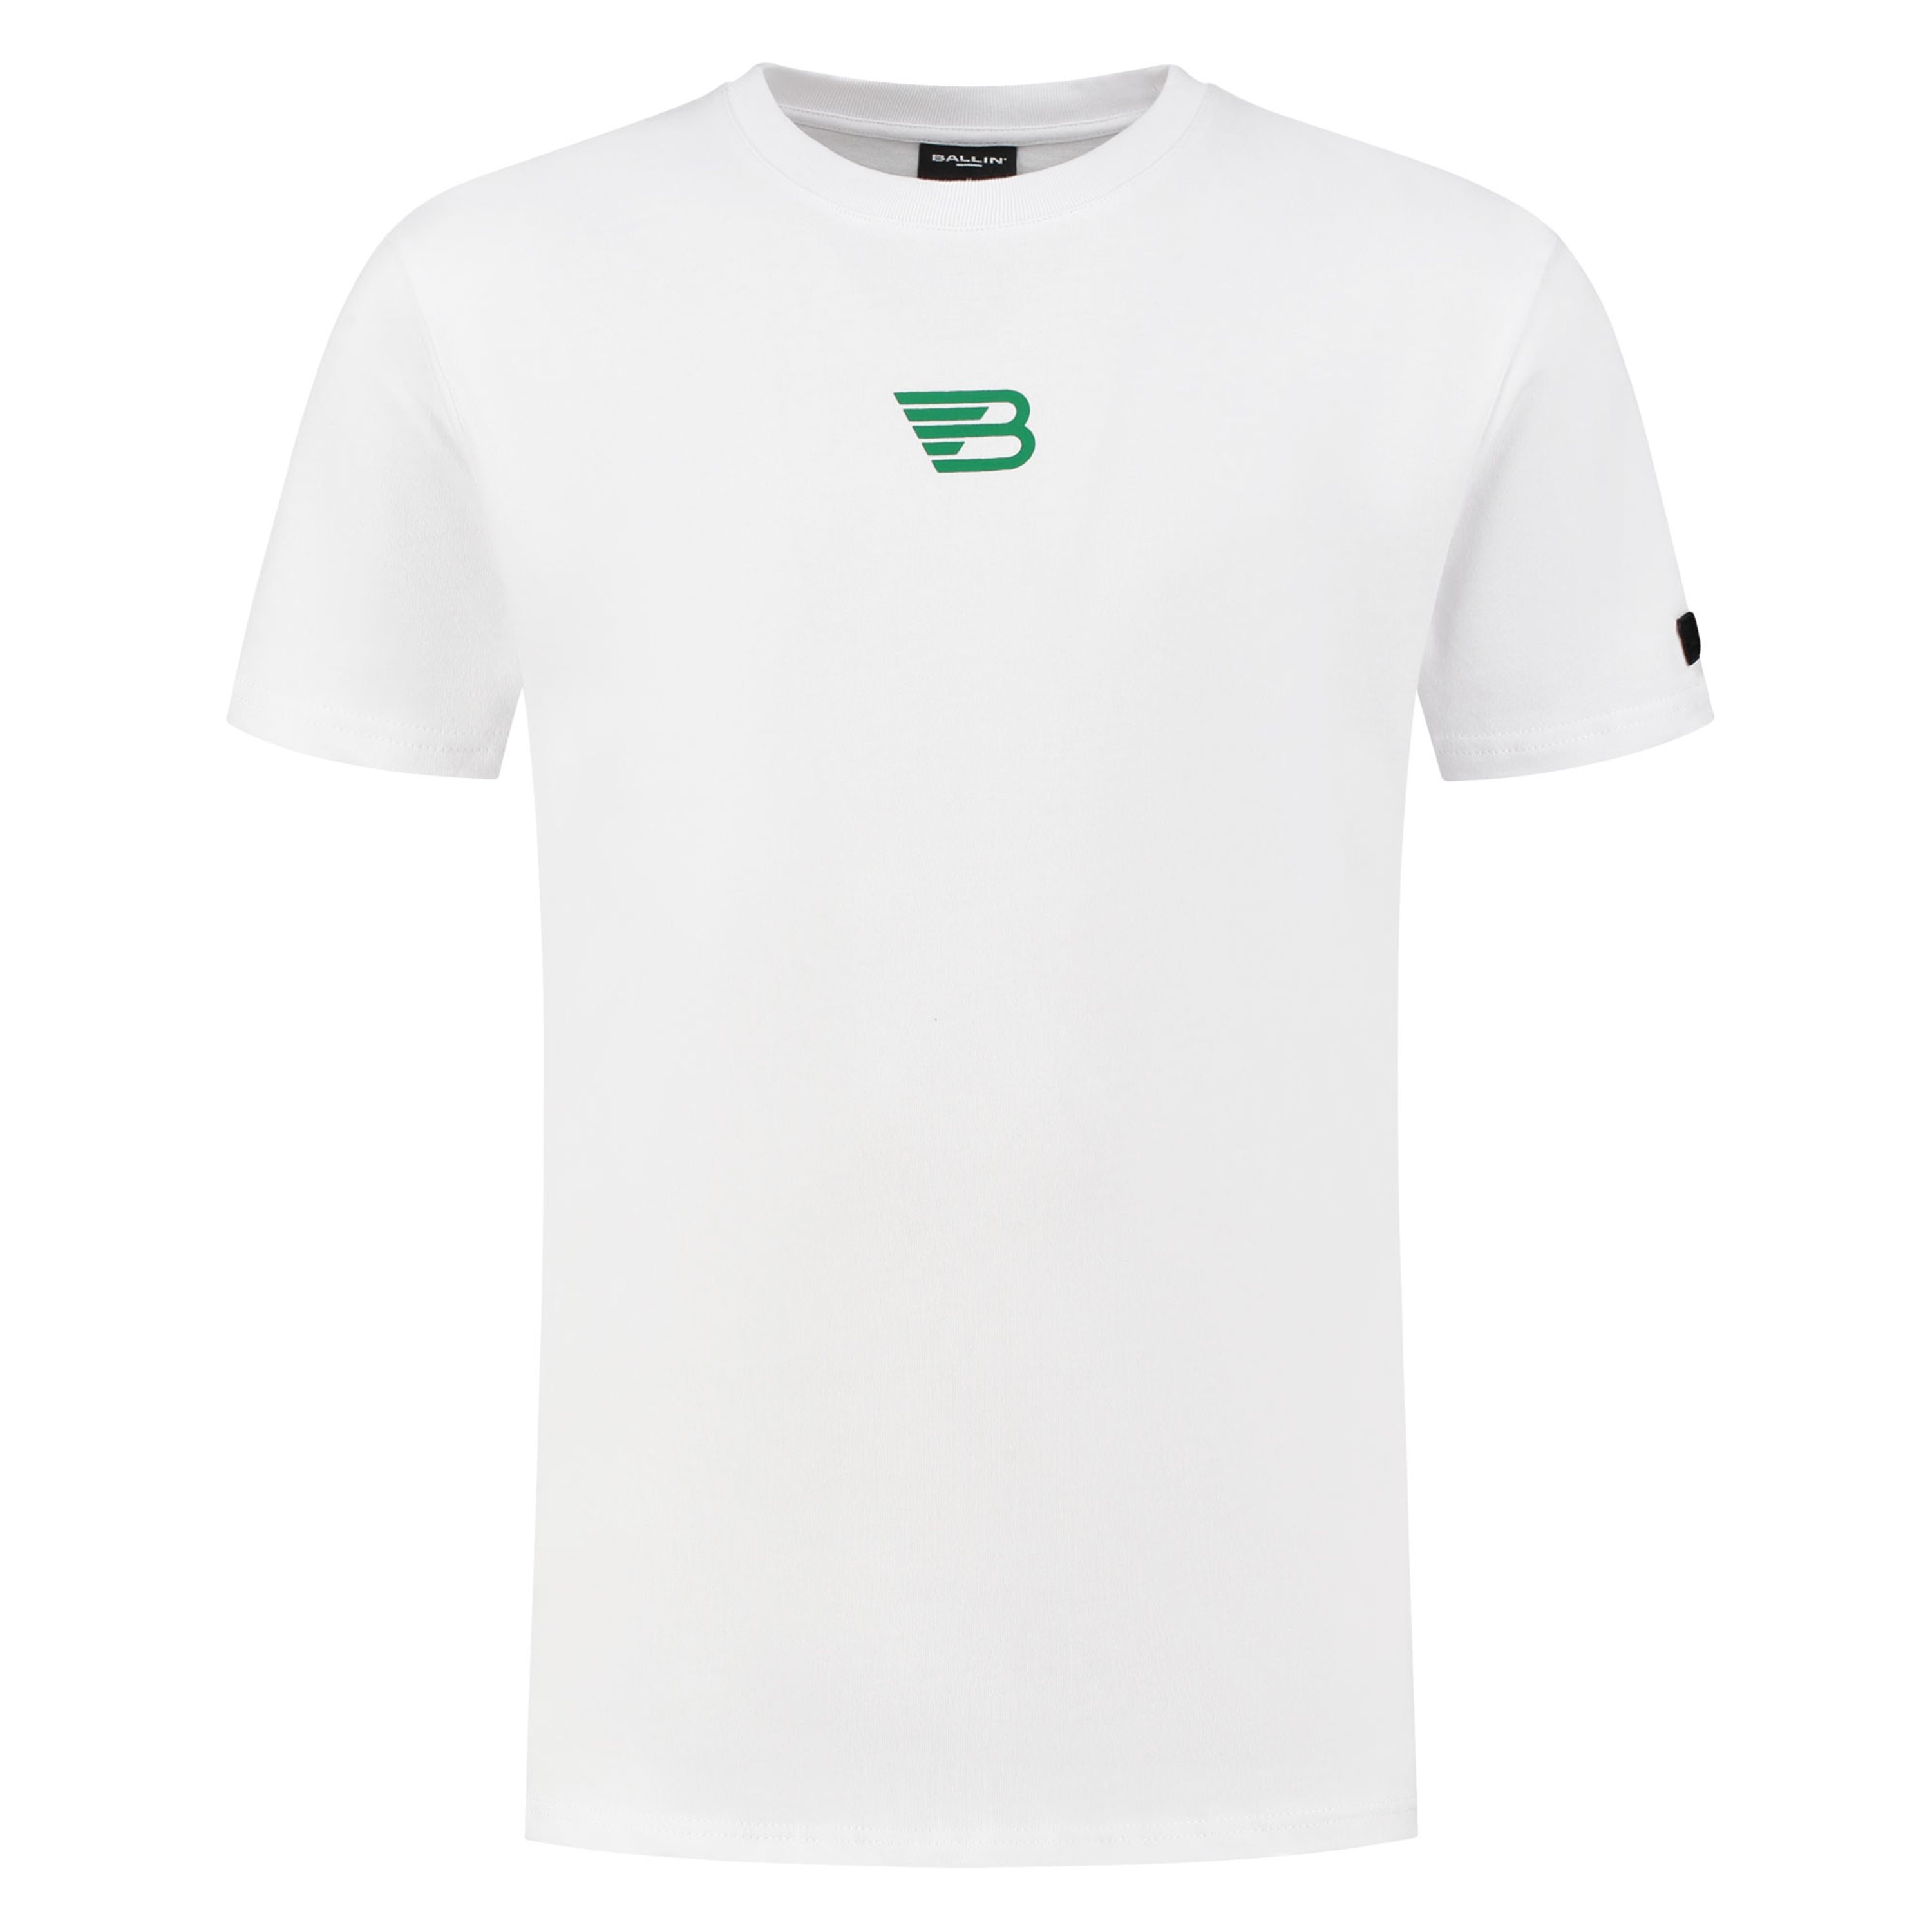 Ballin T-shirt met backprint white